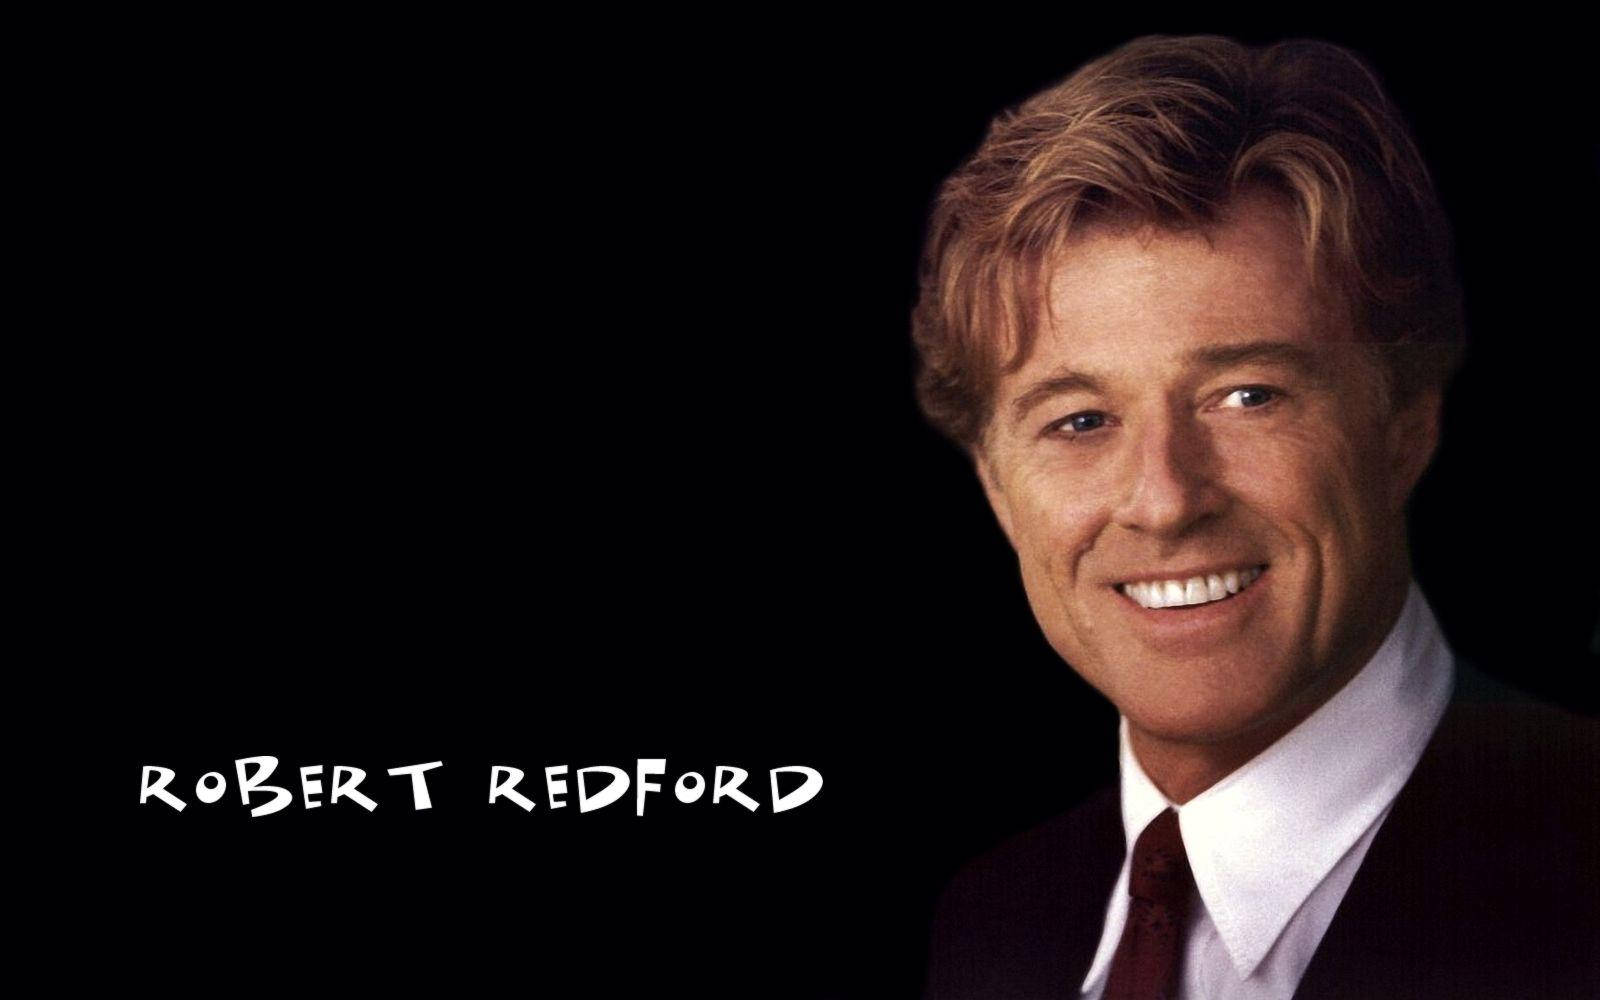 Robert Redford Name Black Background Wallpaper